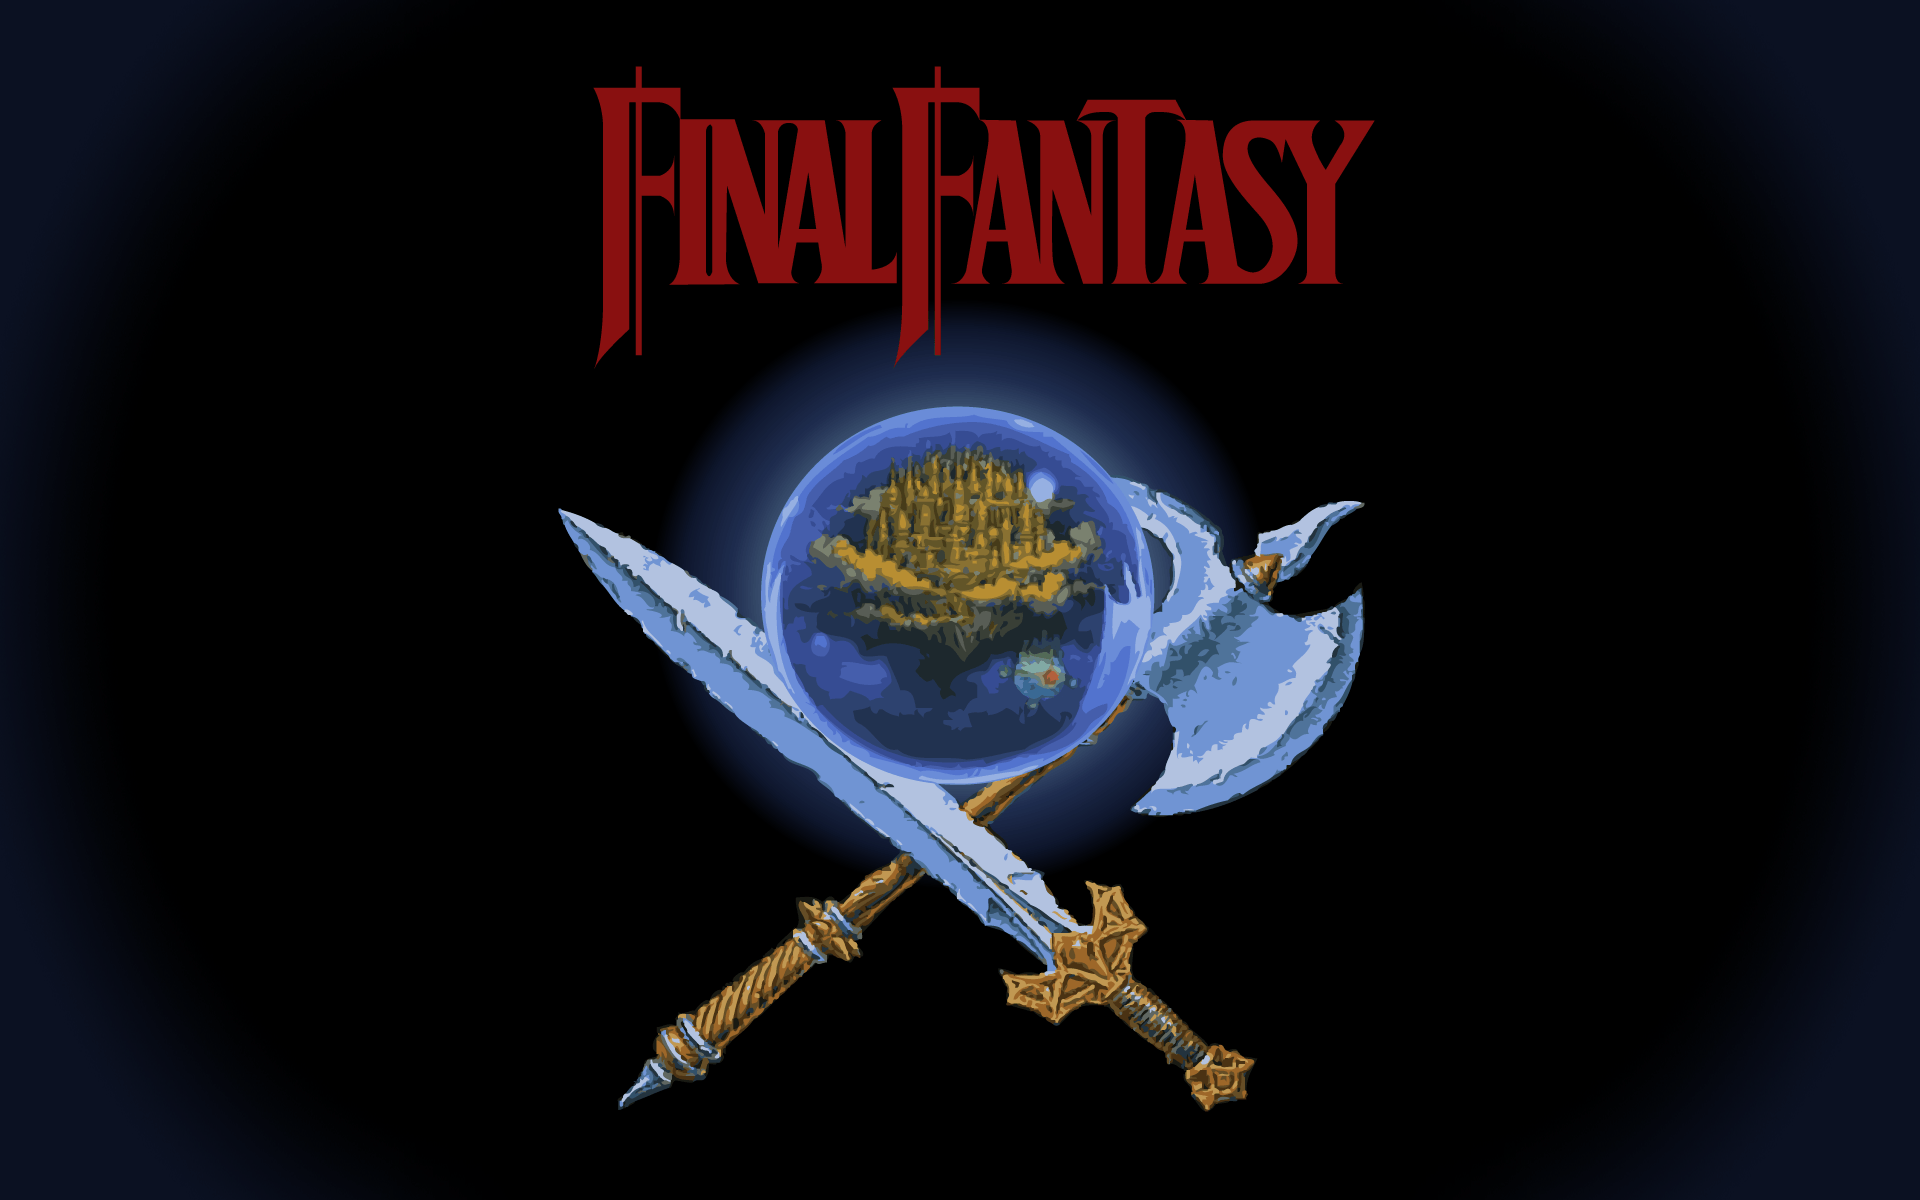 Final Fantasy (NES)